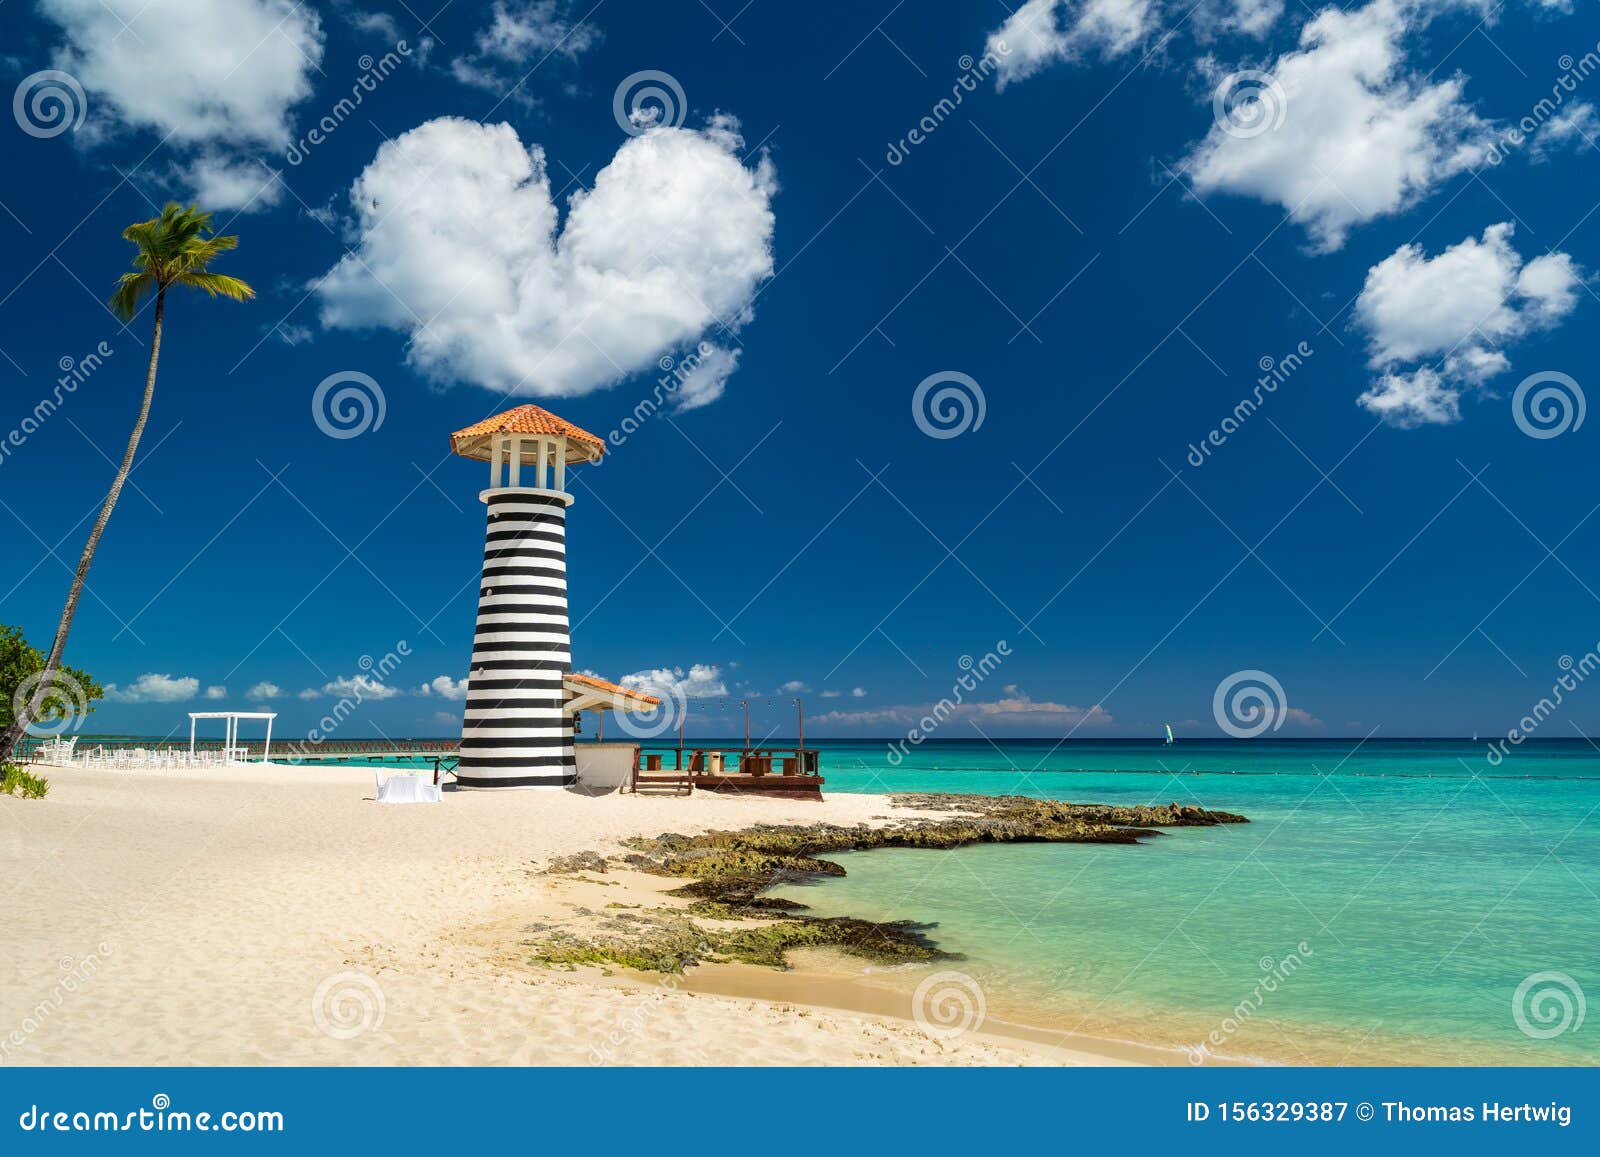 heart d cloud over lighthouse on the beach of the caribbean, dominican republic, bayahibe - love wedding concept